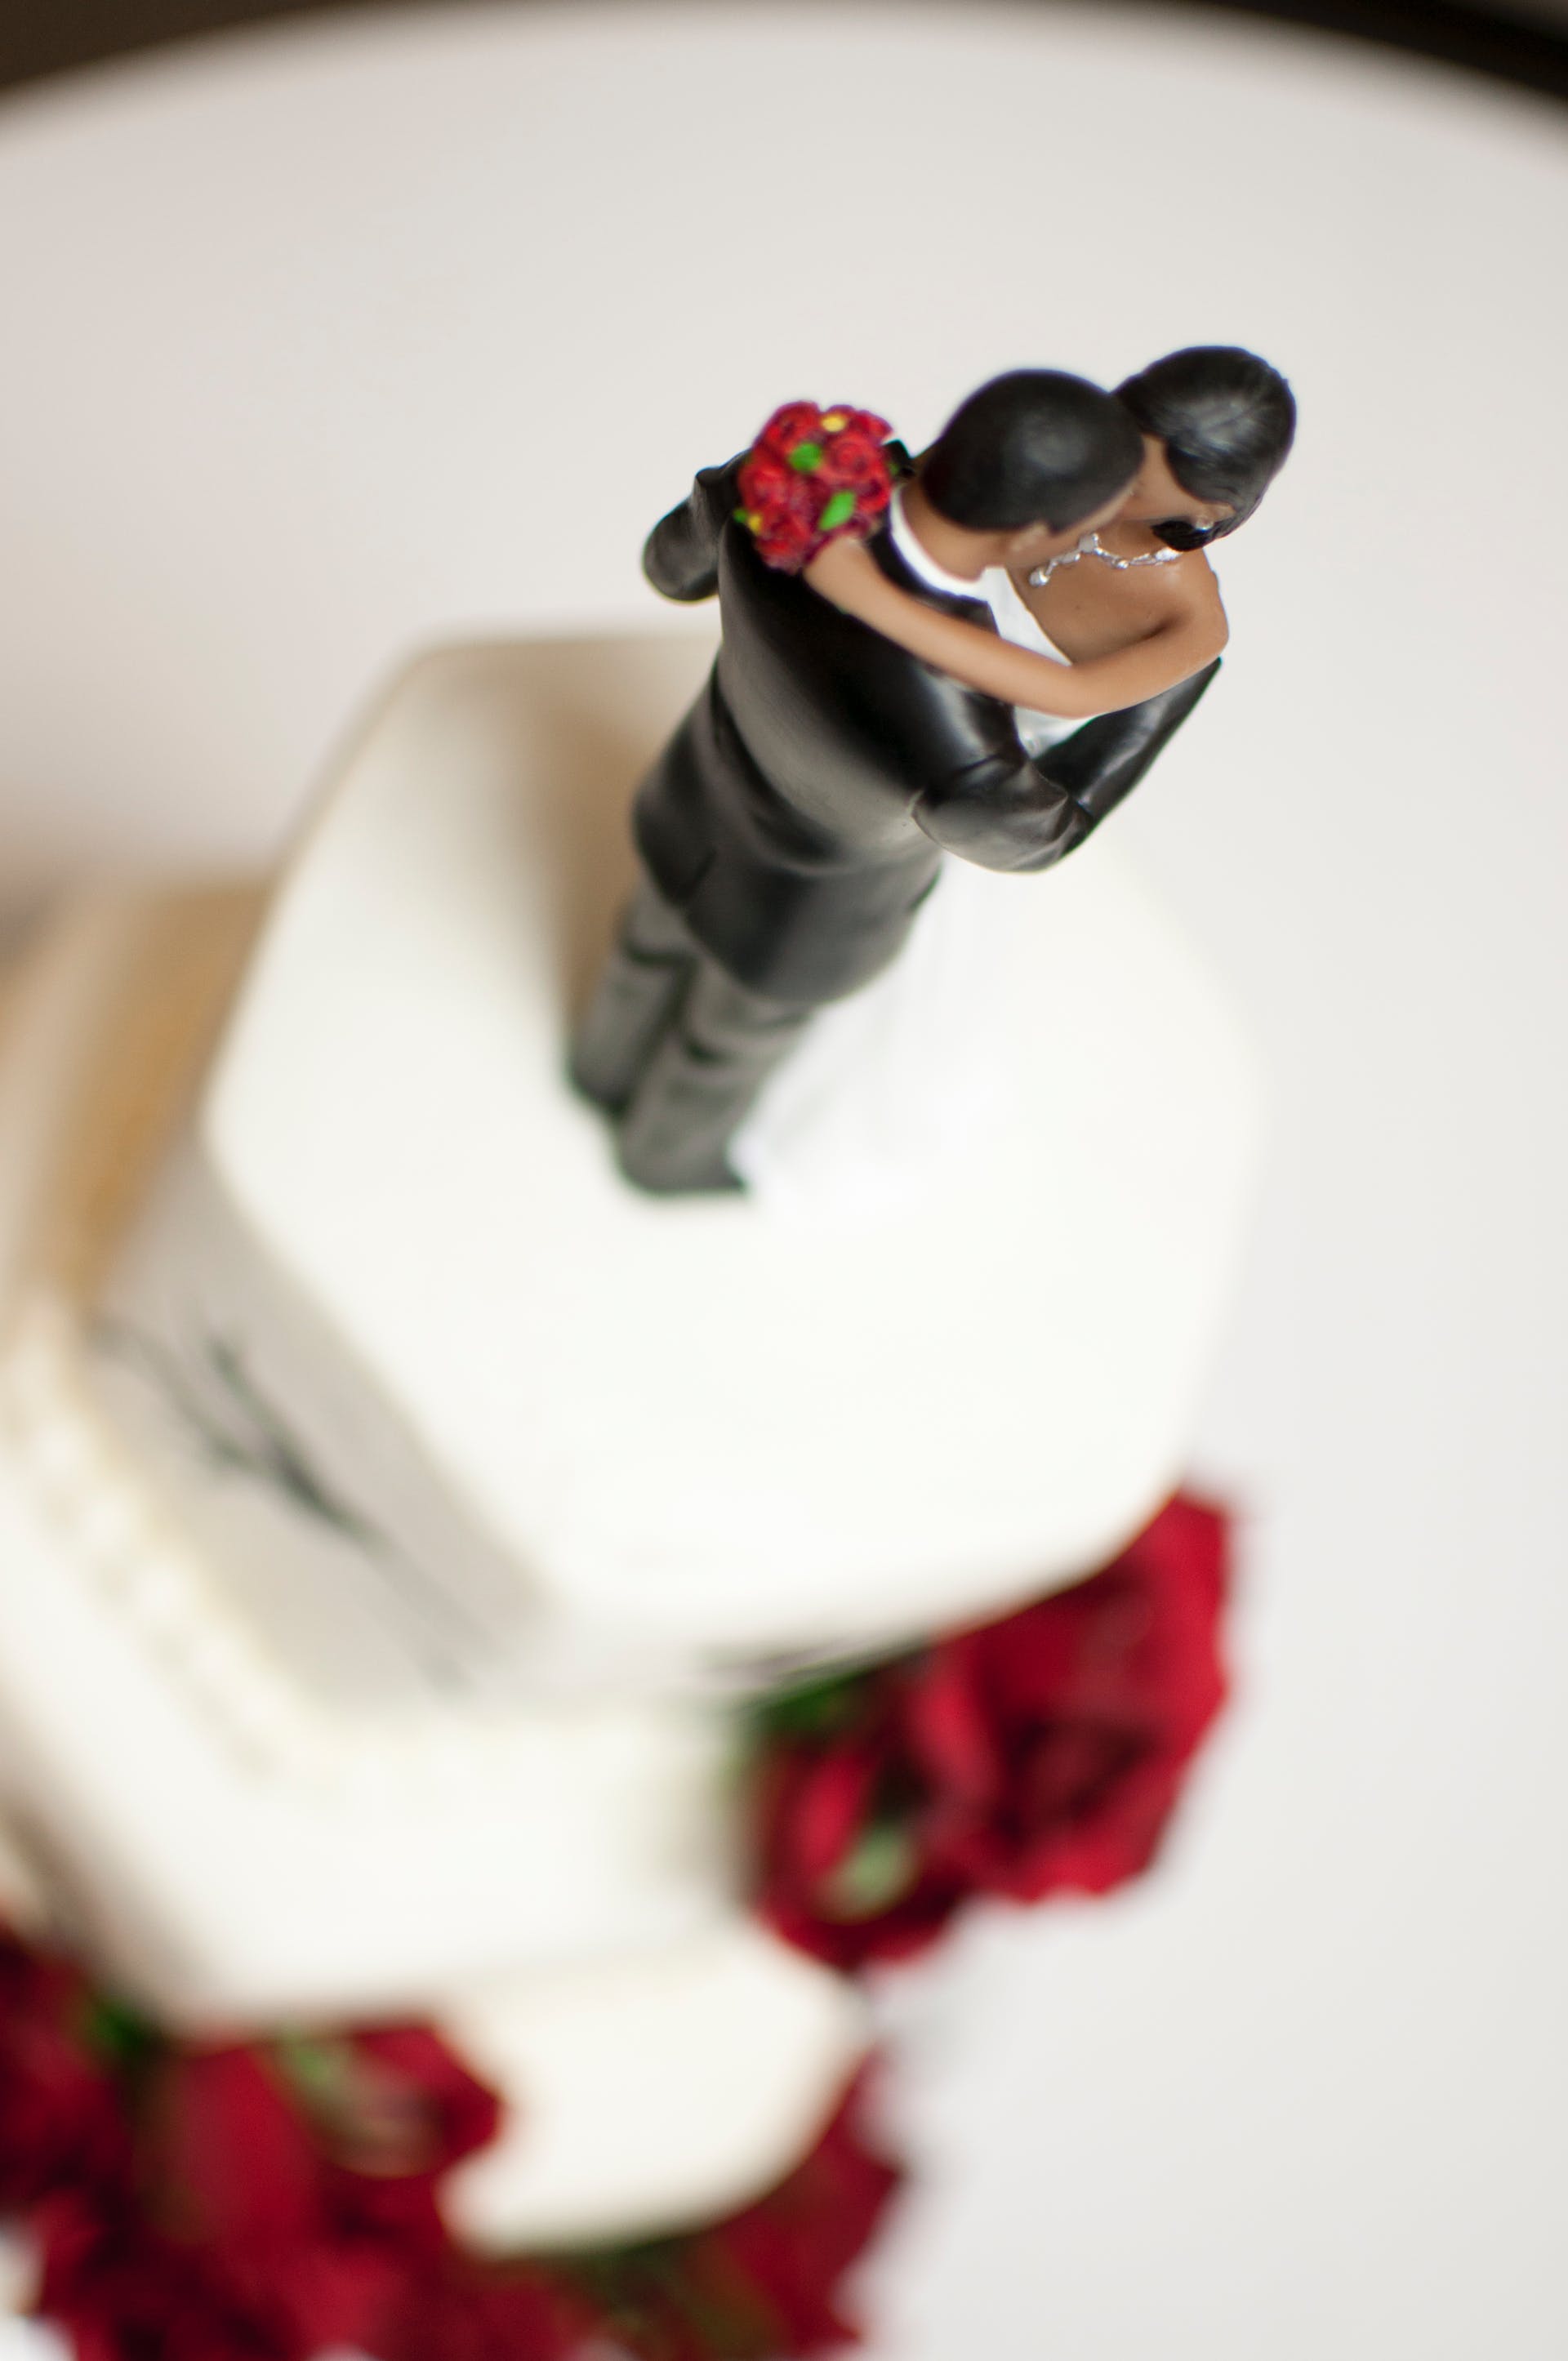 A wedding cake topper | Source: Pexels